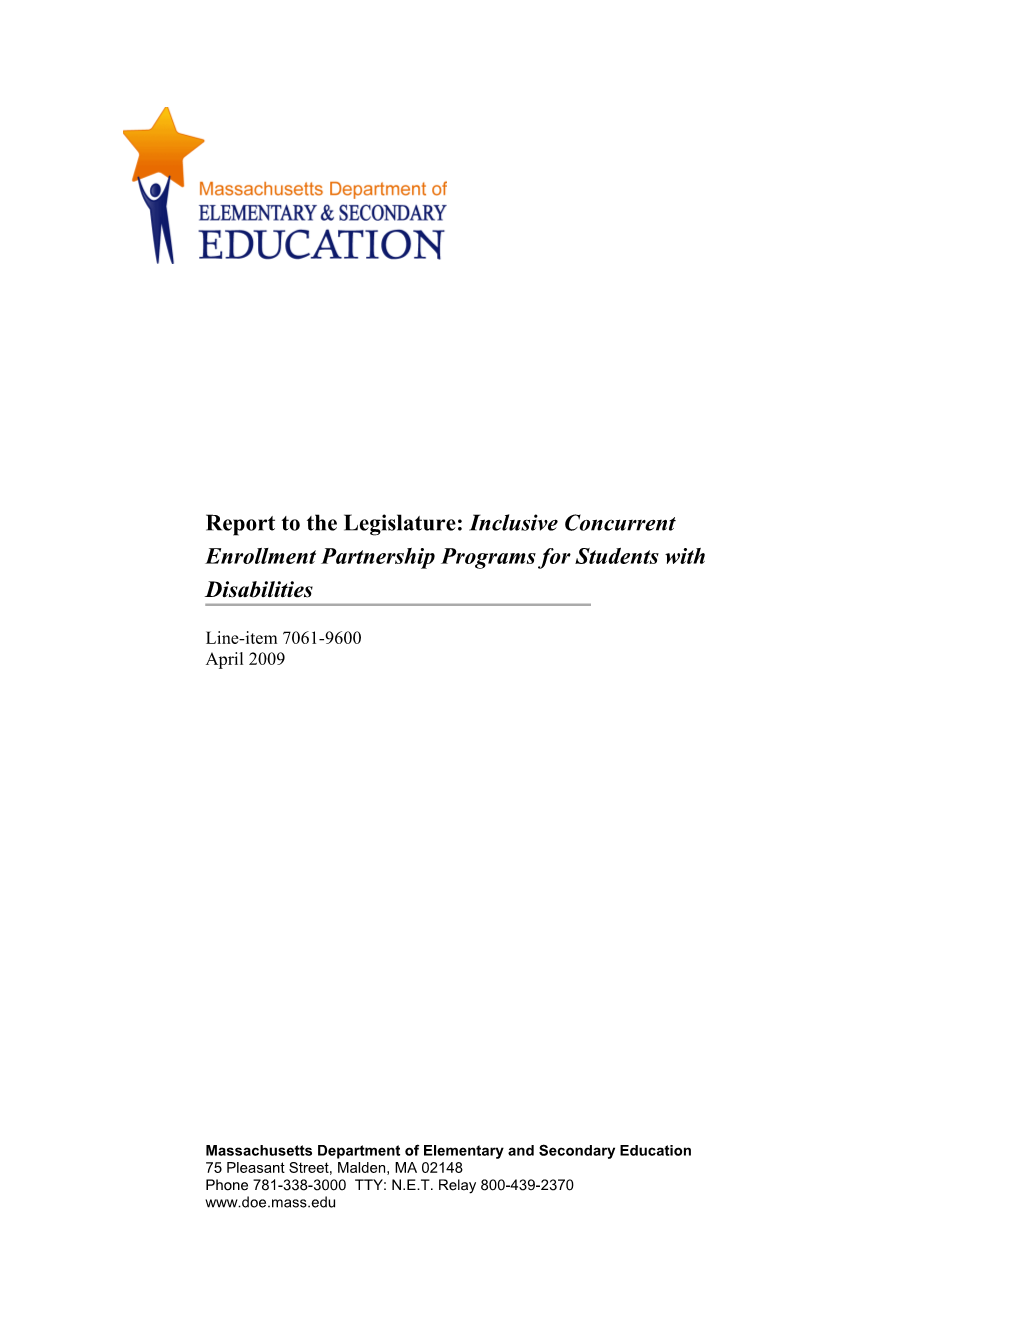 Report to the Legislature: Inclusive Concurrent Enrollment Partnership Programs for Students